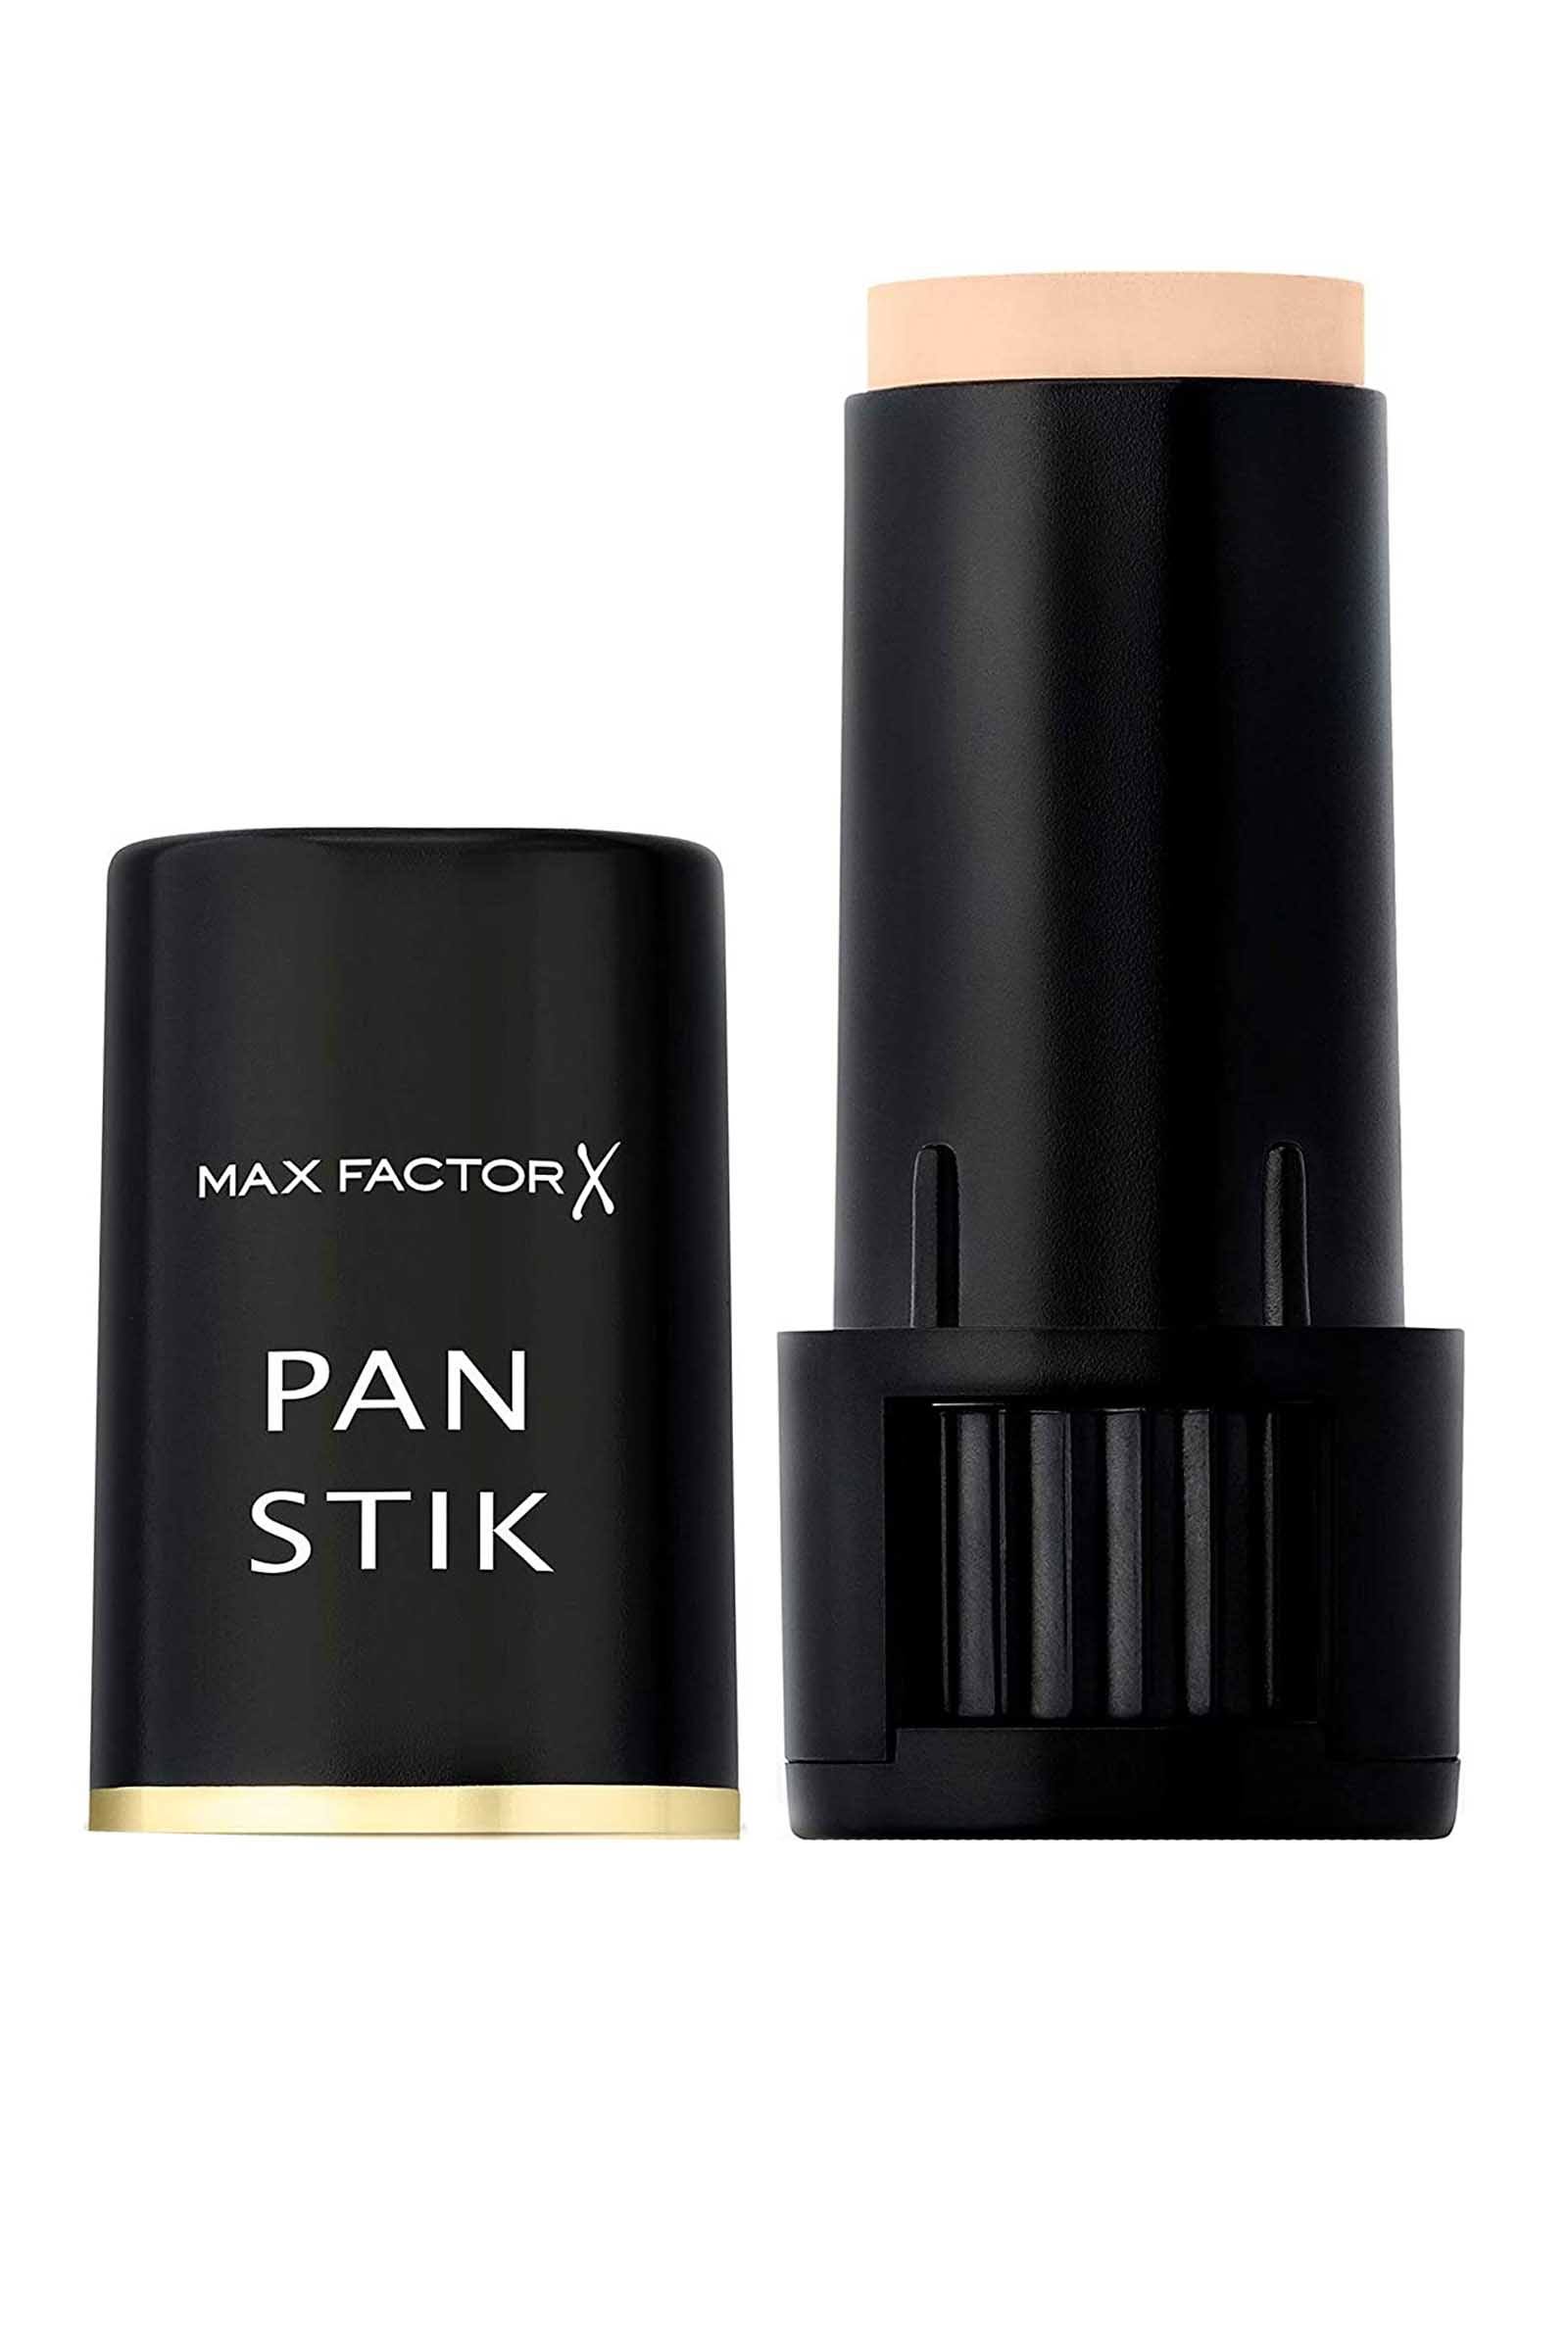 Max Factor Pan Stik Foundation - 12 True Beige